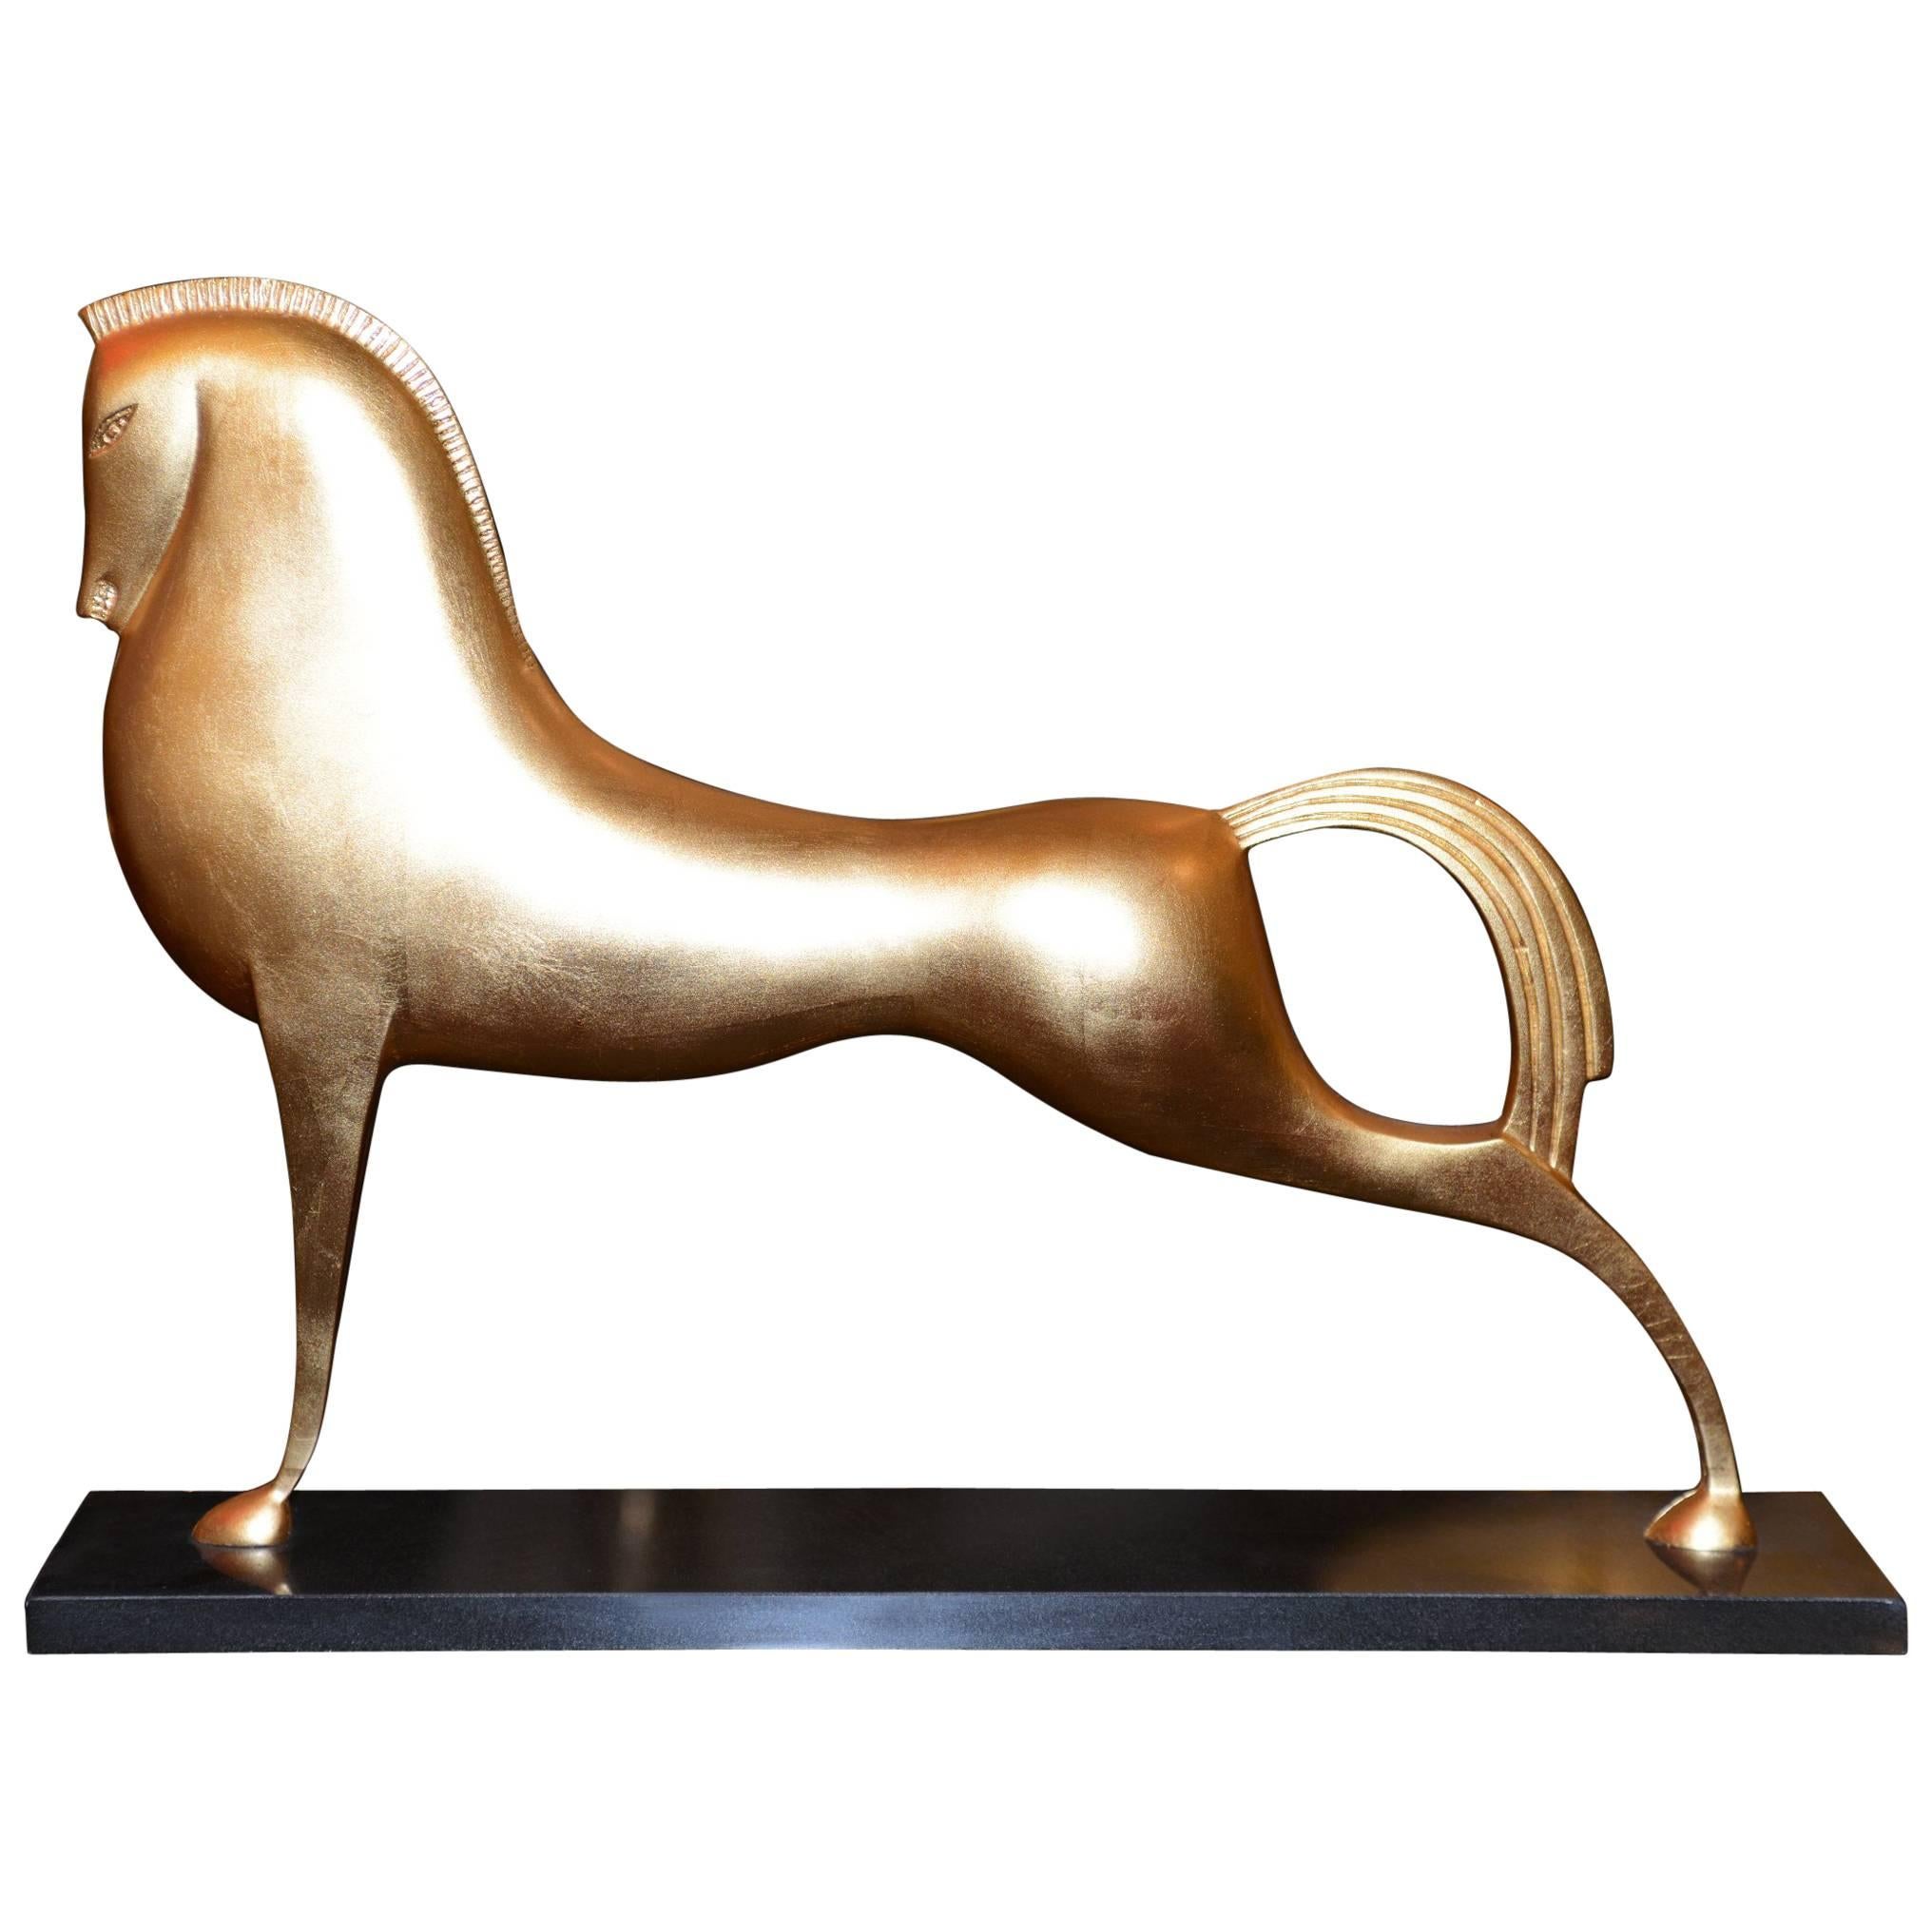 Griechisches Pferd Skulptur in massiver Bronze in Blattgold Finish